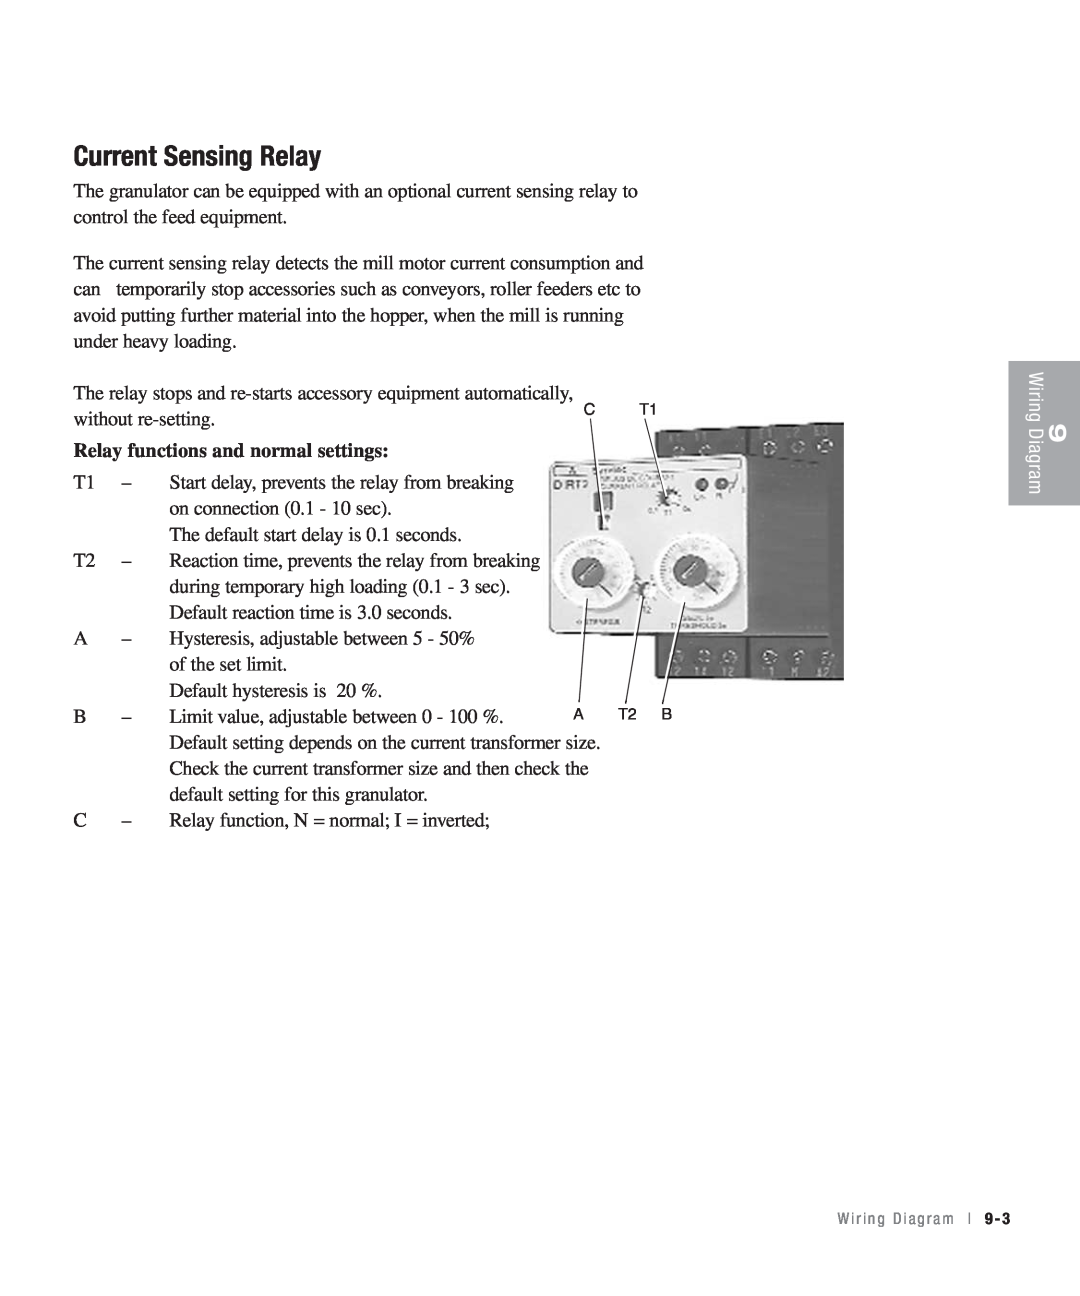 Conair CHS-810 manual Current Sensing Relay, Relay functions and normal settings, Wiring Diagram 